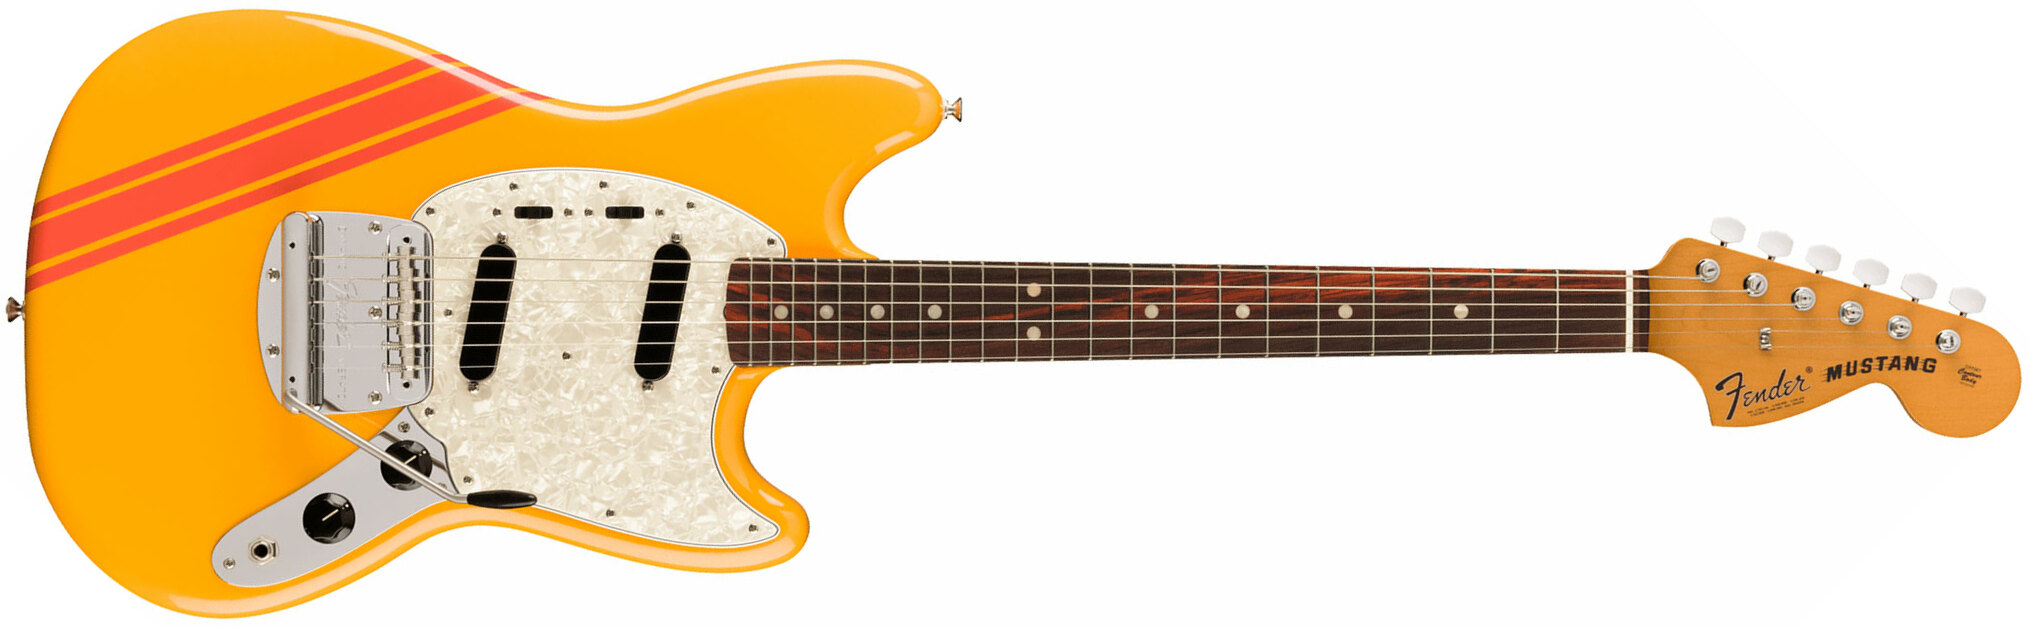 Fender Mustang 70s Competition Vintera 2 Mex 2s Trem Rw - Competition Orange - Retro-Rock-E-Gitarre - Main picture